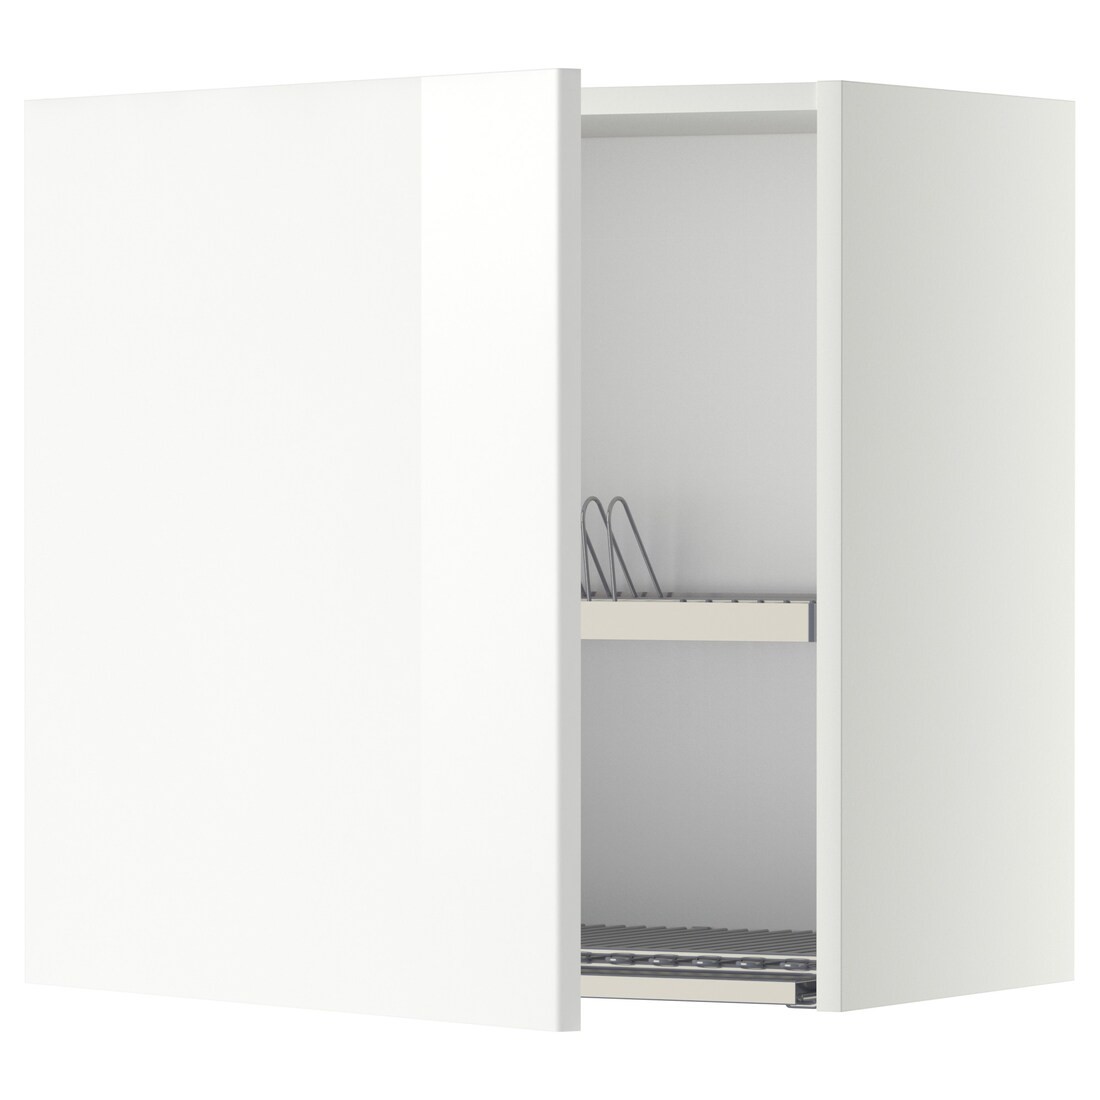 METOD МЕТОД Навесной шкаф с сушилкой, белый / Ringhult белый, 60x60 см